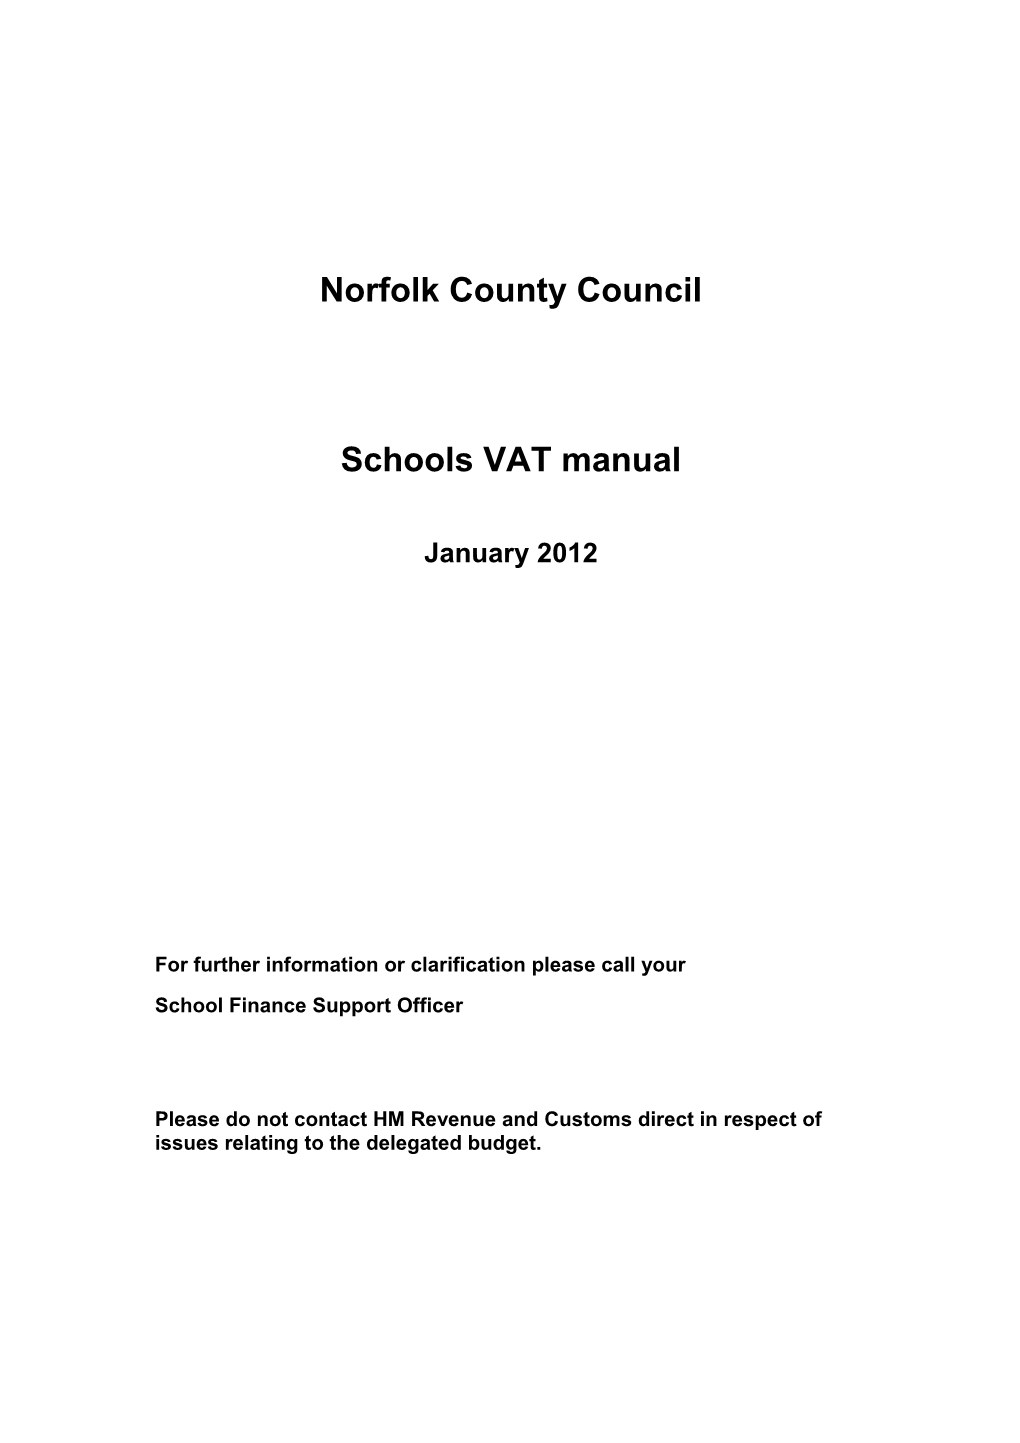 Norfolk County Council - Schools VAT Manual